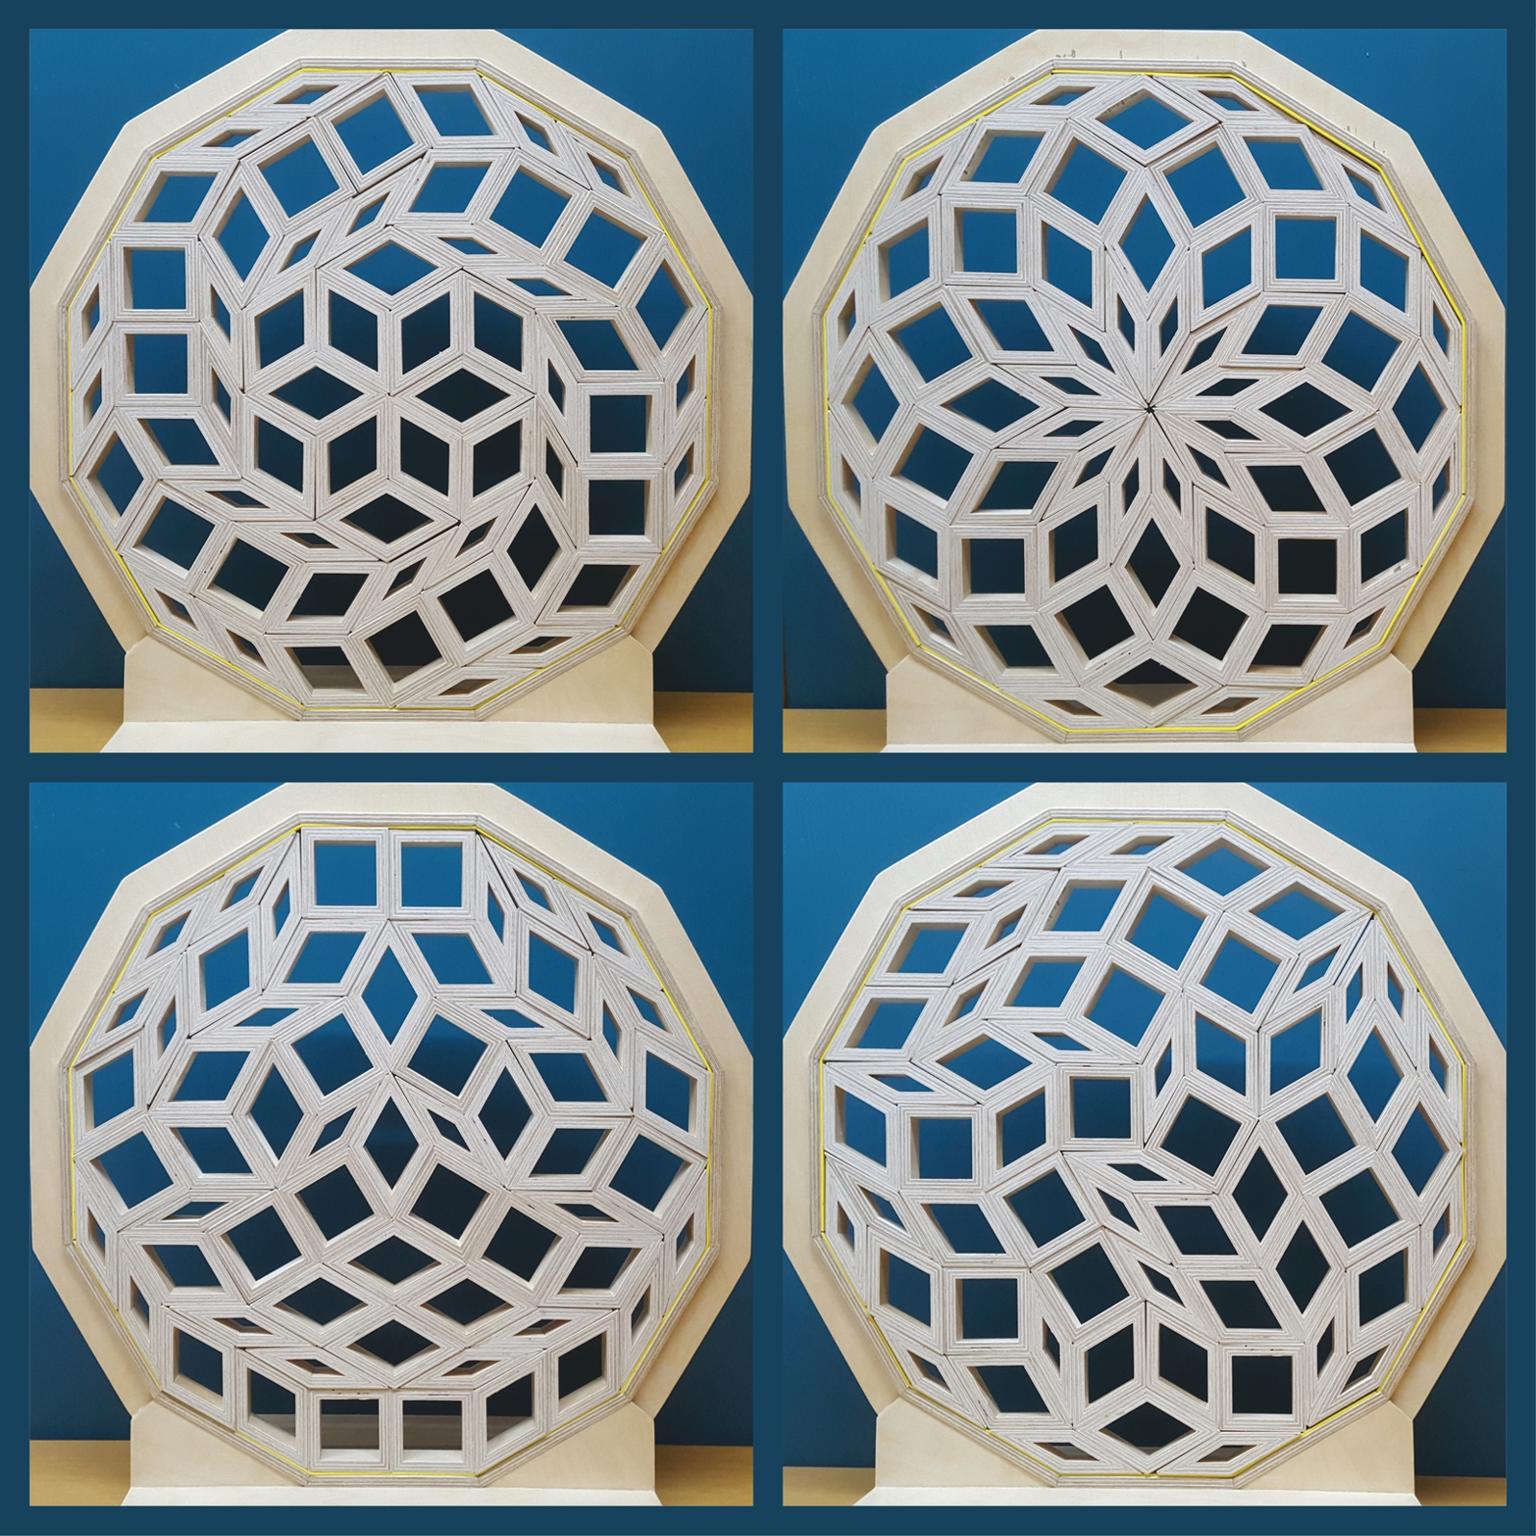 Image for entry 'Interactive dodecagonal latticework'